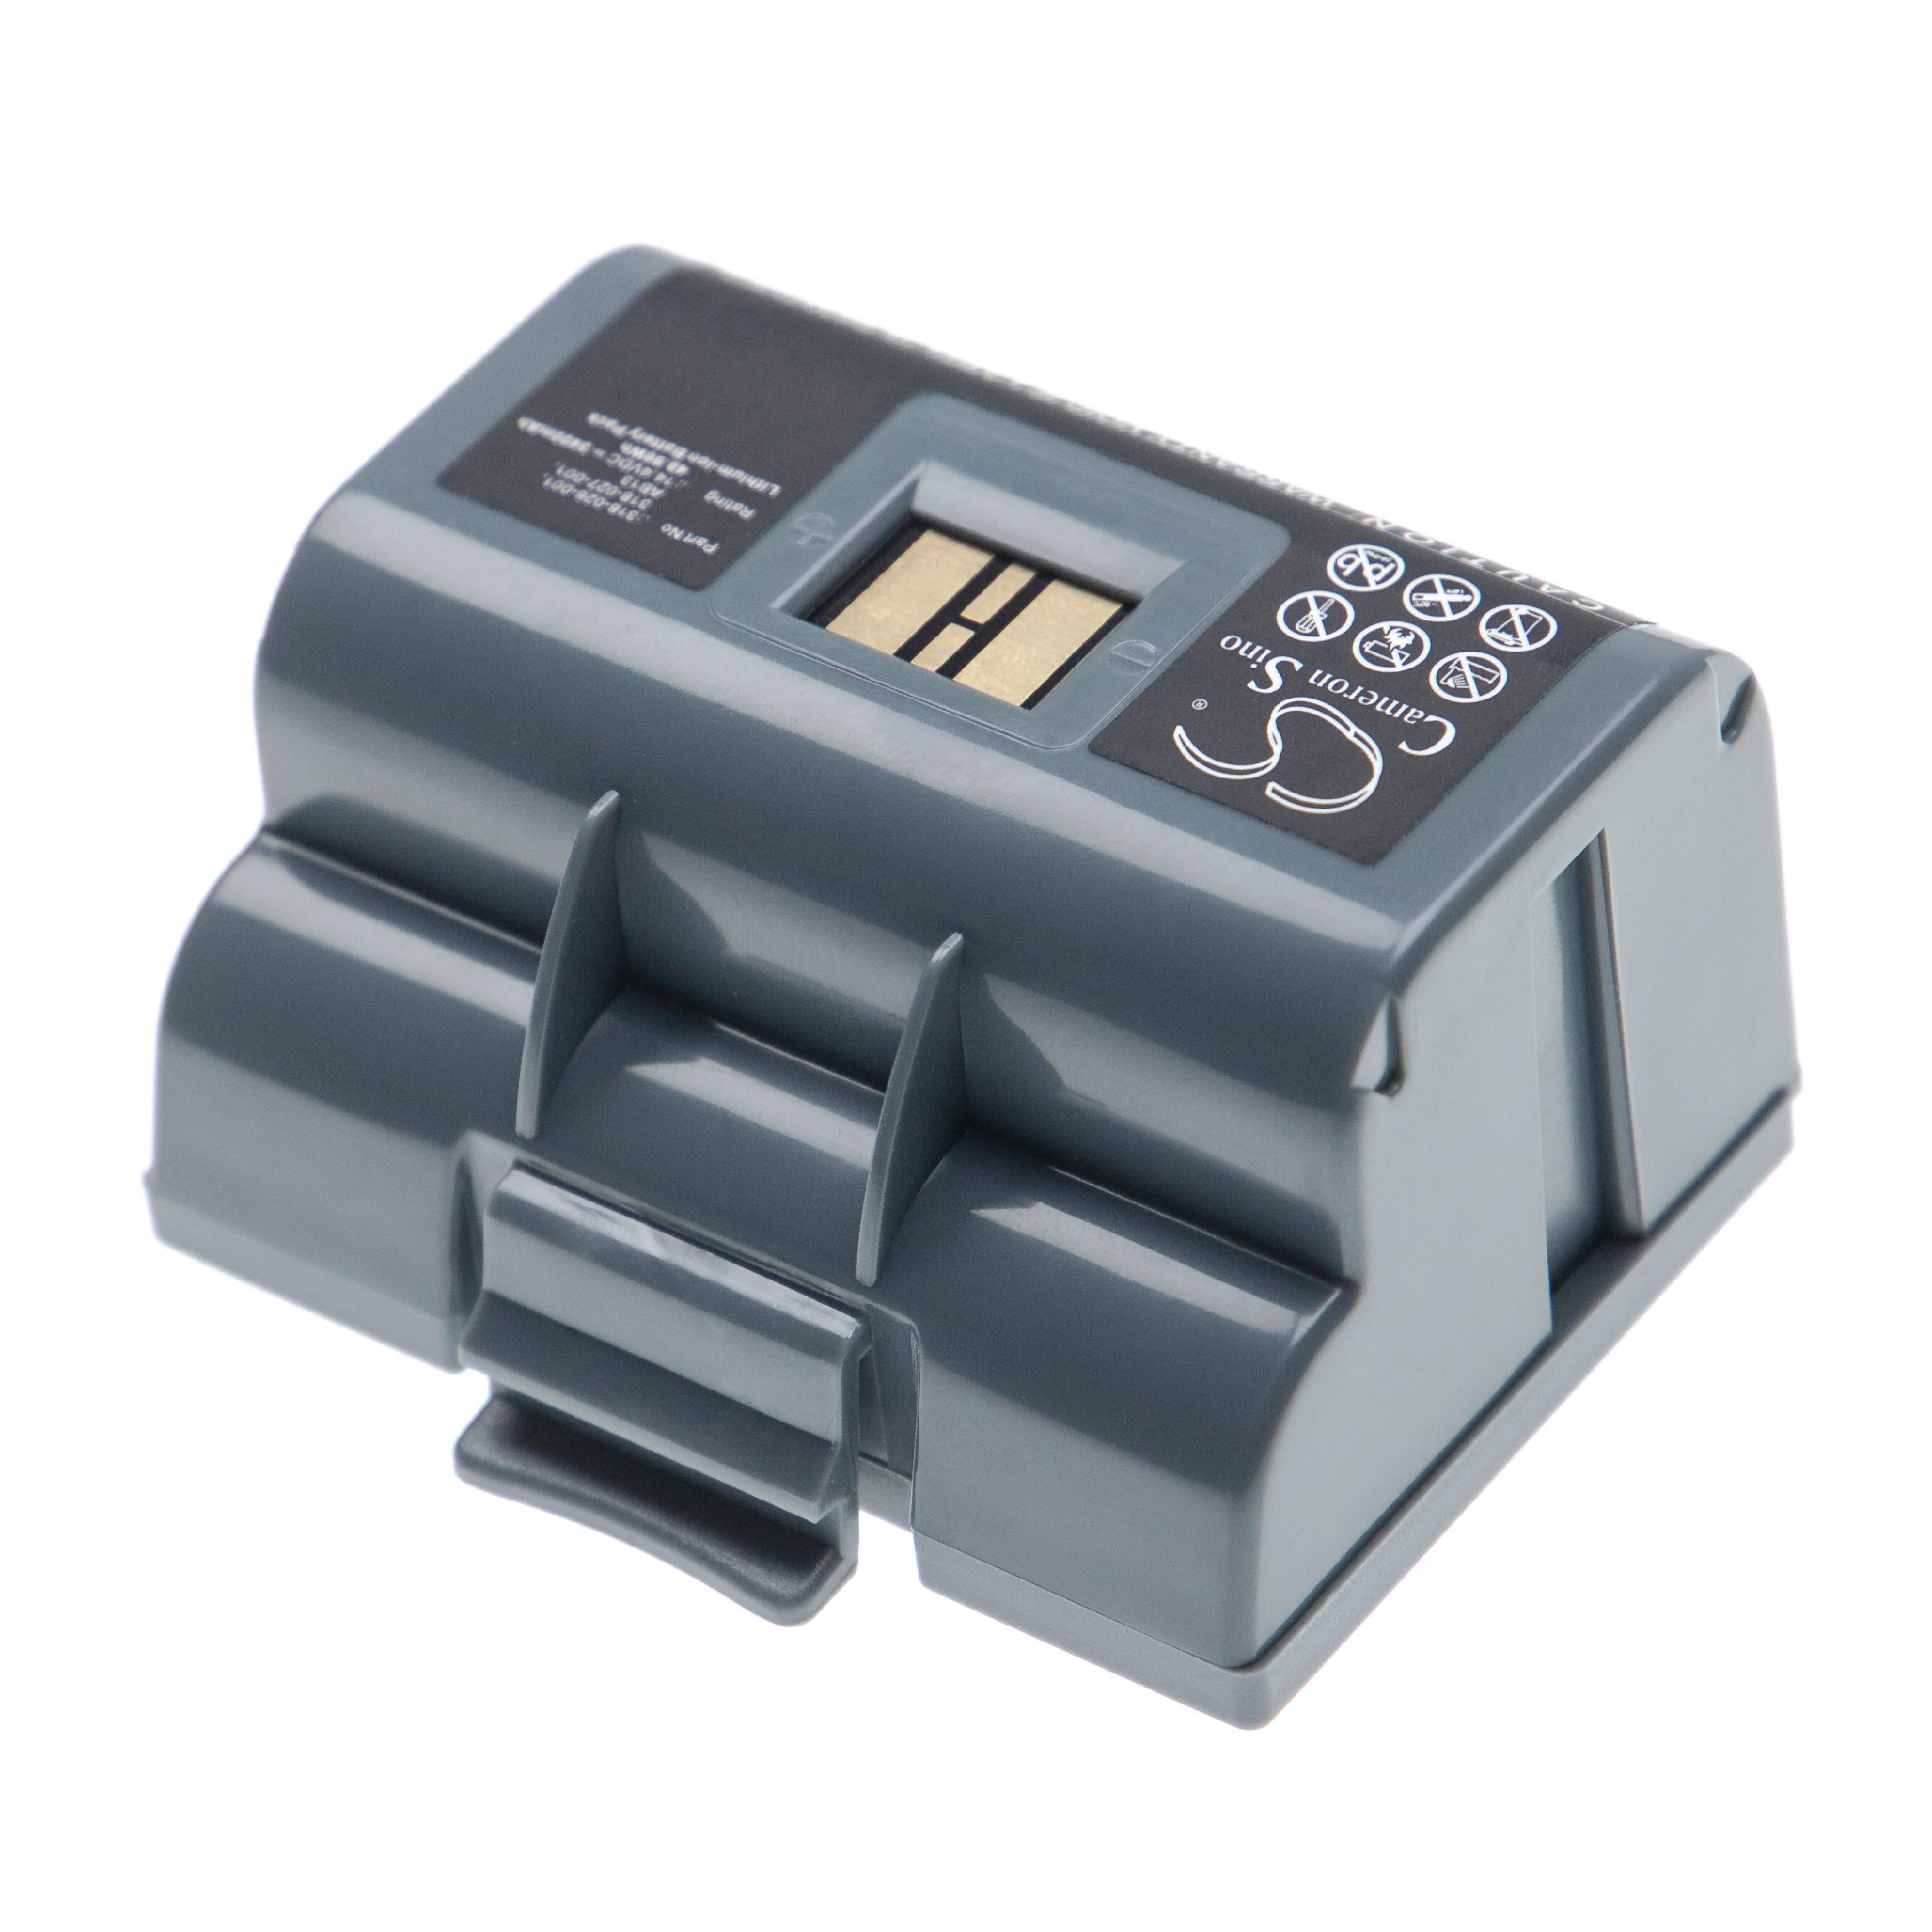 Akumulator do drukarki / drukarki etykiet zamiennik Intermec 318-026-001, 318-026-003 - 3400 mAh 14,4 V Li-Ion